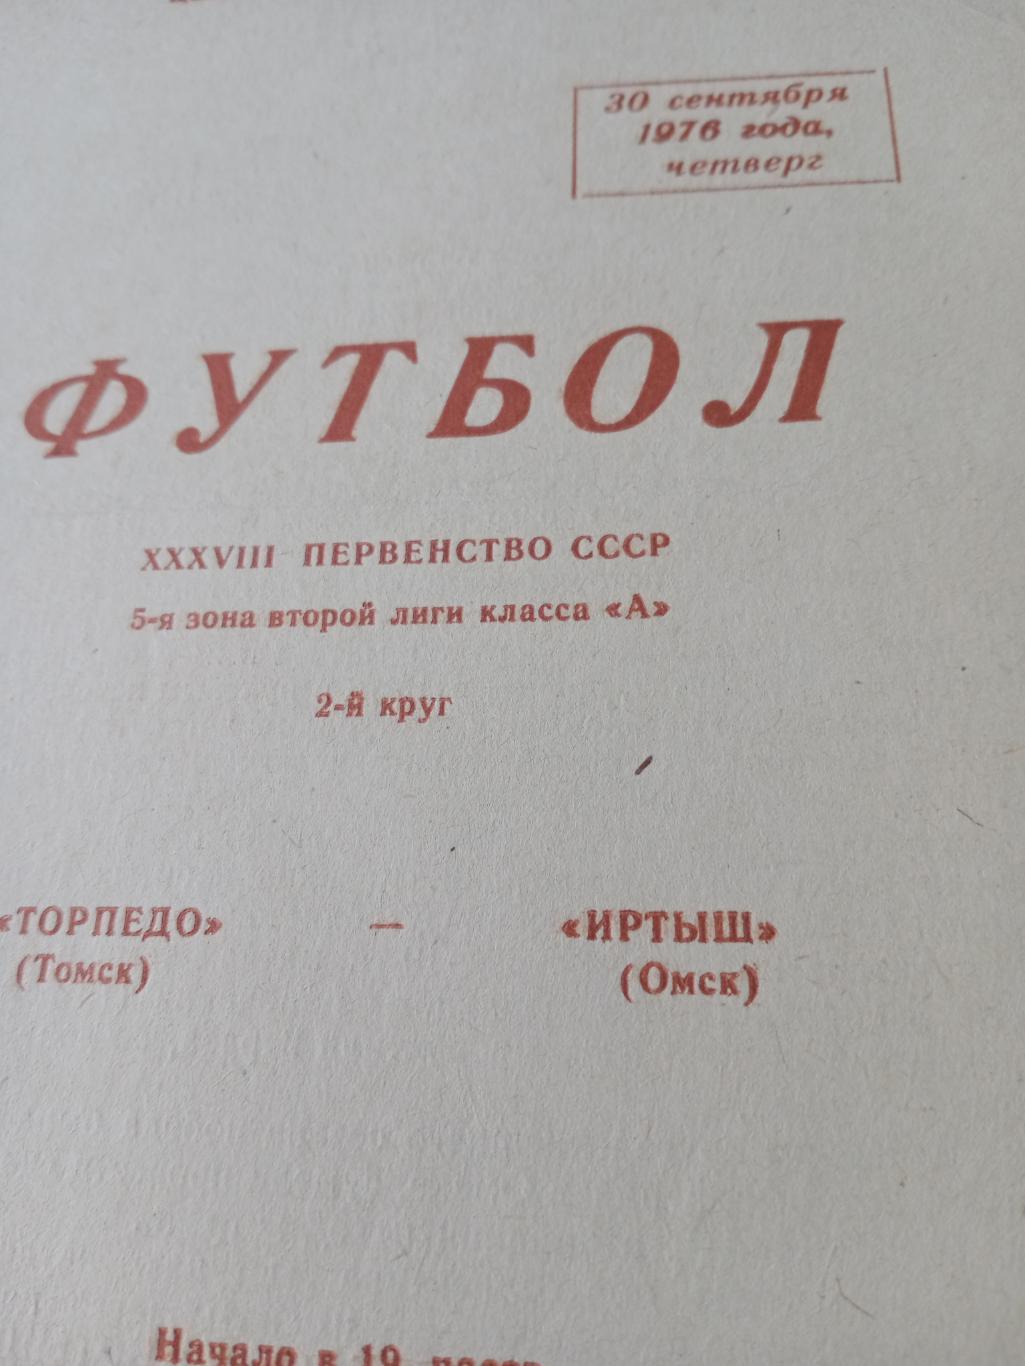 Торпедо Томск - Иртыш Омск. 30 сентября 1976 год